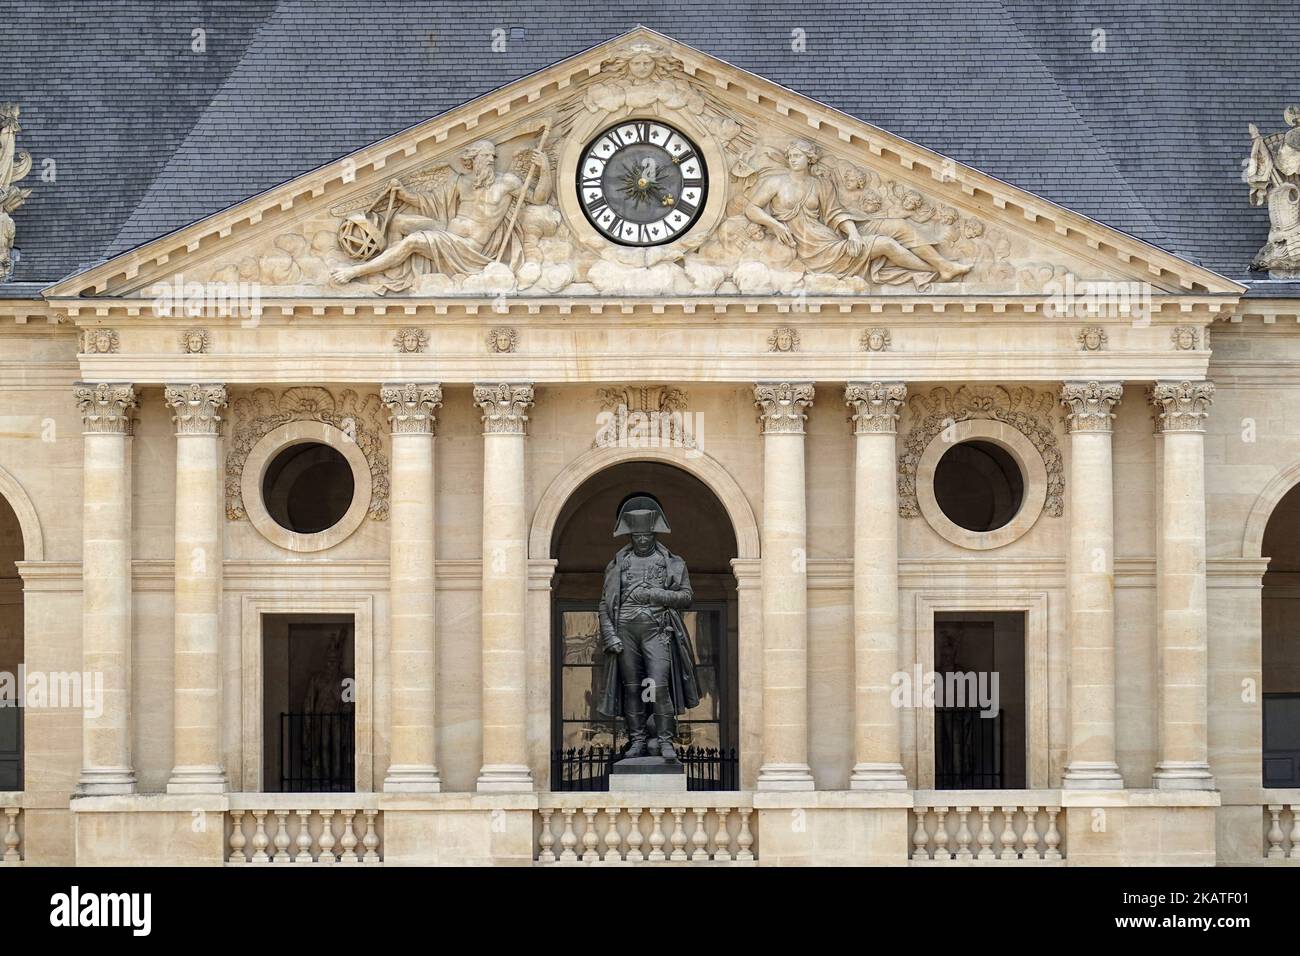 France, Paris, Hotel des Invalides, The Musee de l'Armee (Army Museum) national military museum of France   Photo © Fabio Mazzarella/Sintesi/Alamy Sto Stock Photo